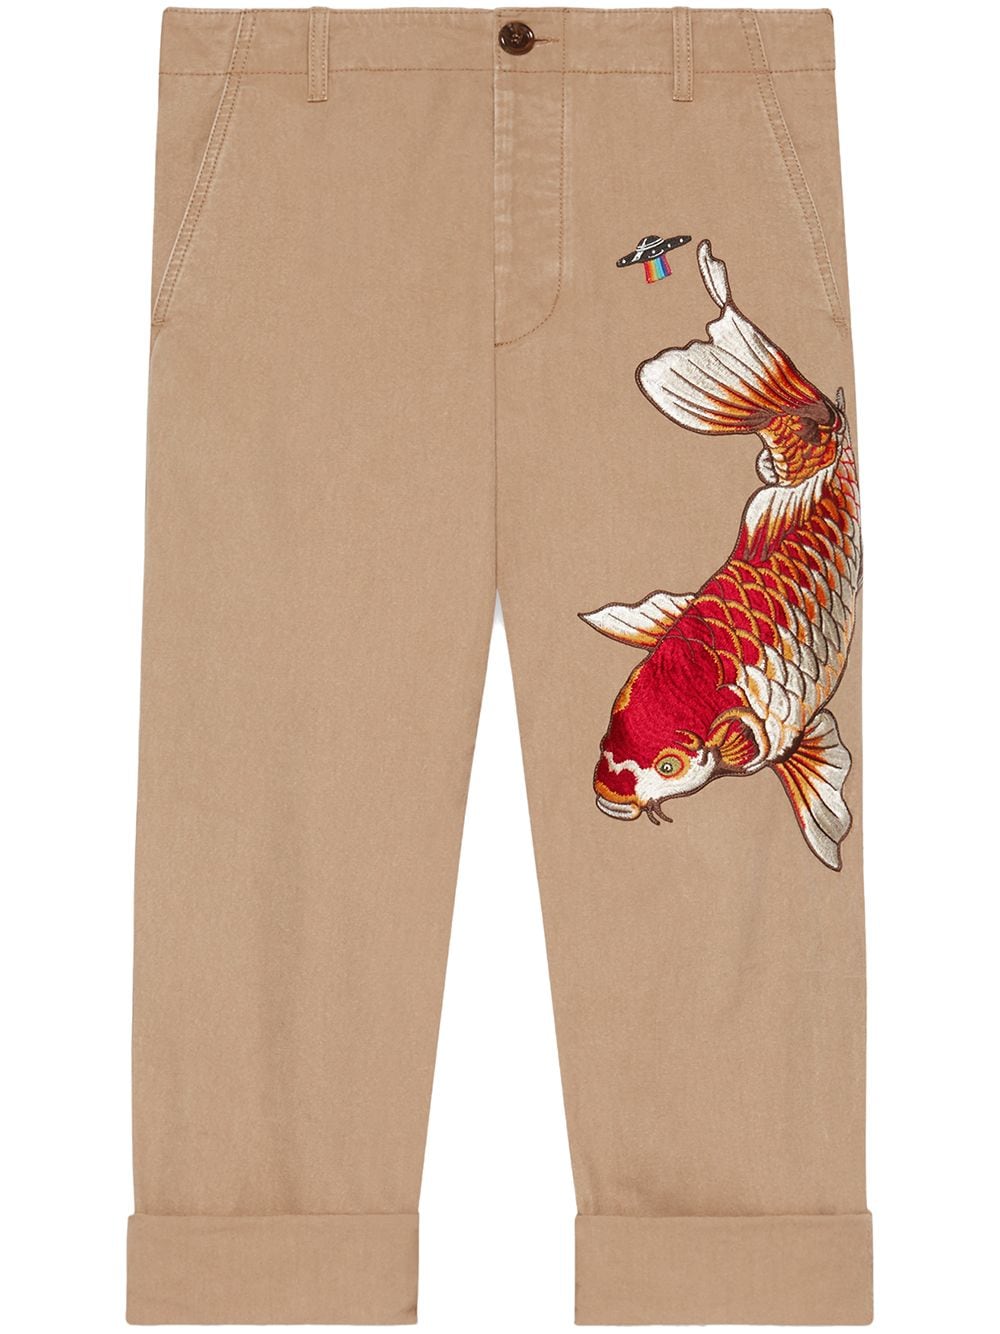 фото Gucci брюки с аппликацией в виде рыбы